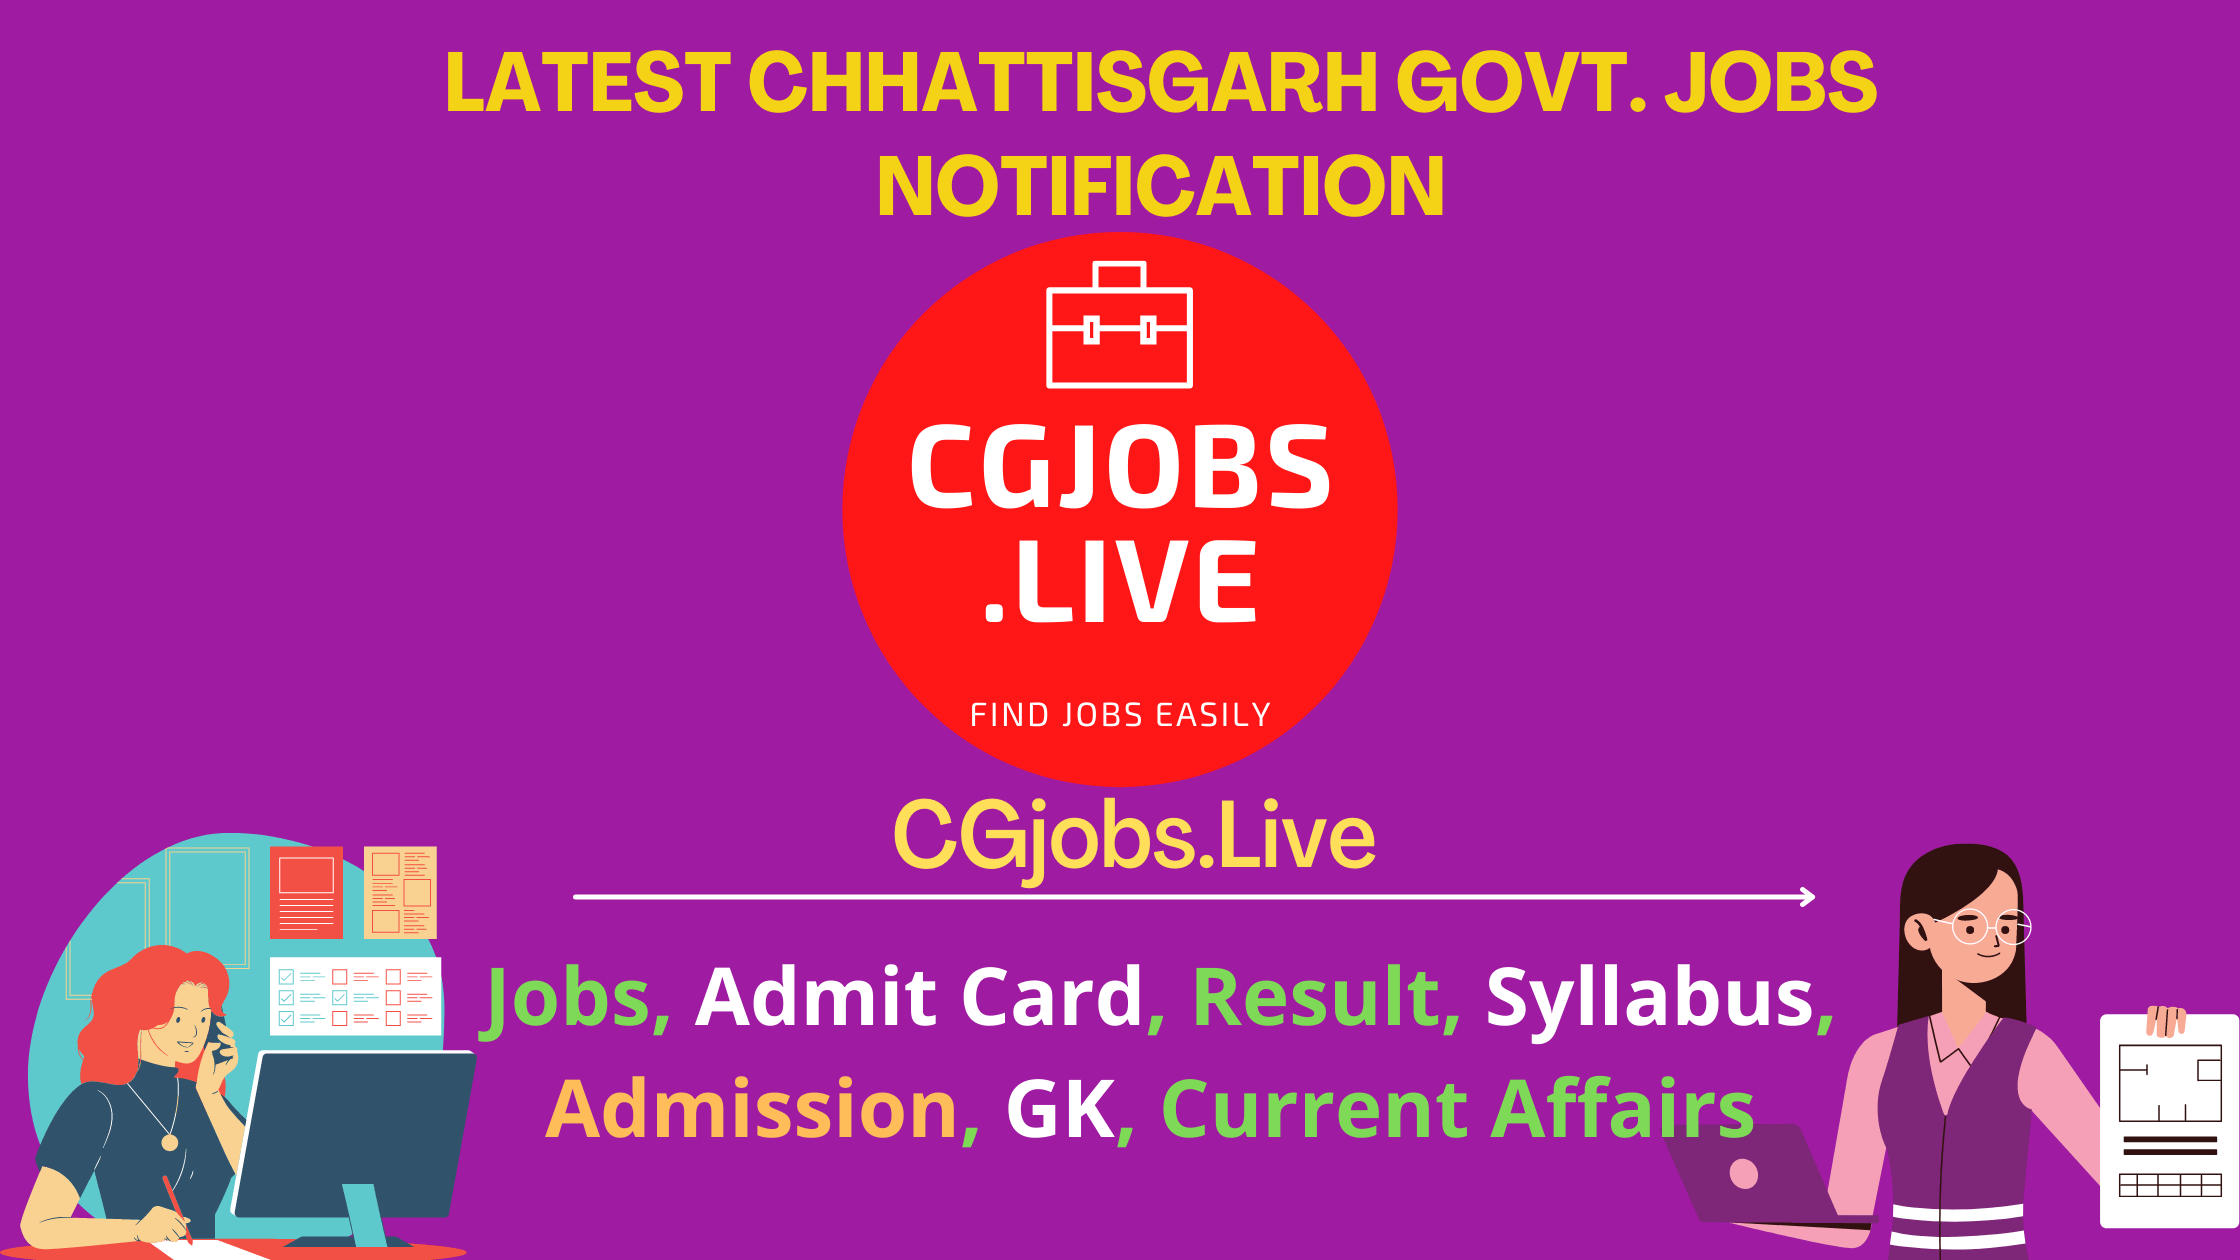 Latest Chhattisgarh Govt. Jobs Cgjobs.live